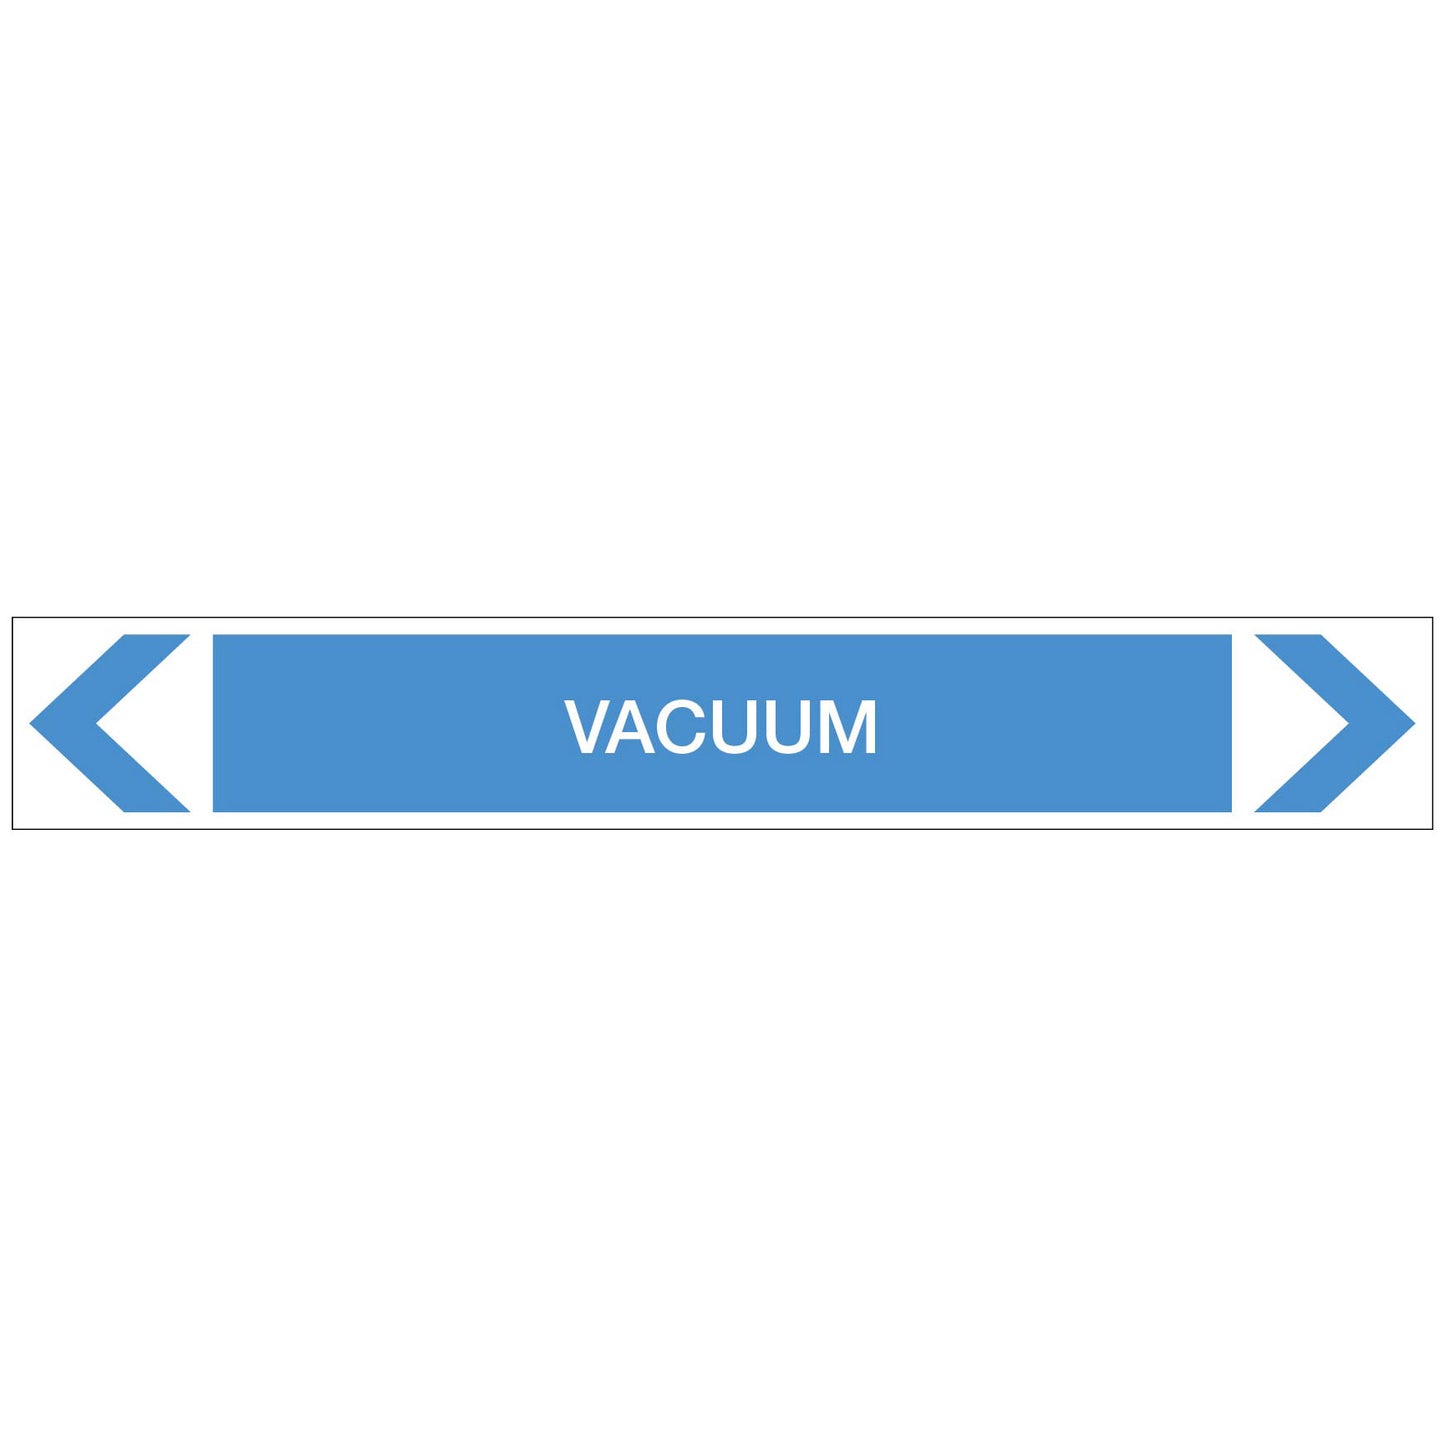 Air - Vacuum - Pipe Marker Sticker